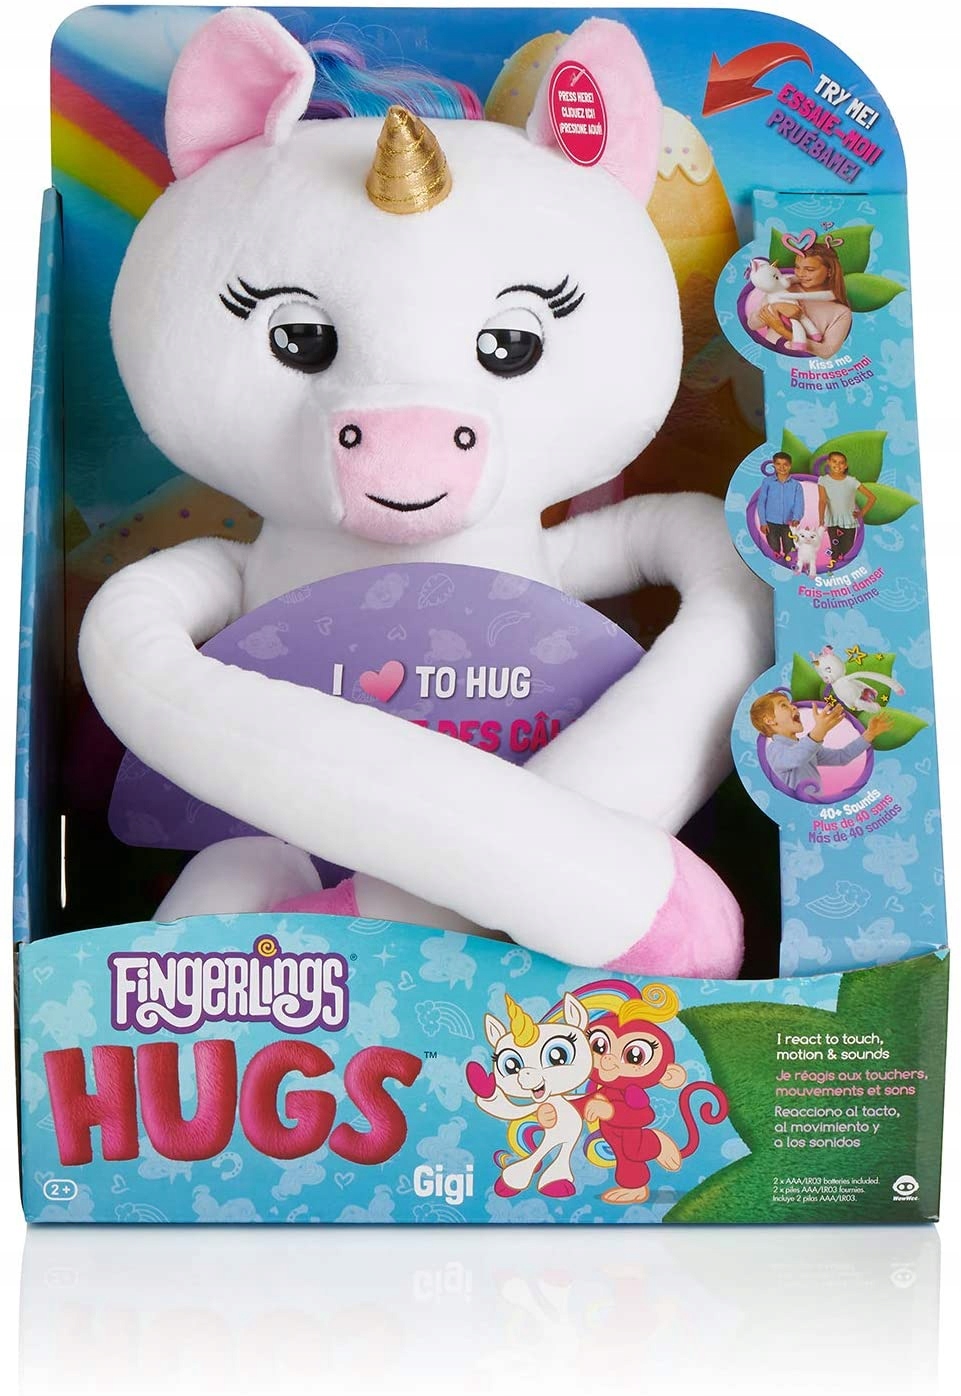 Fingerlings Hugs JednoroŻec Gigi Interaktywny 12978036529 Allegropl